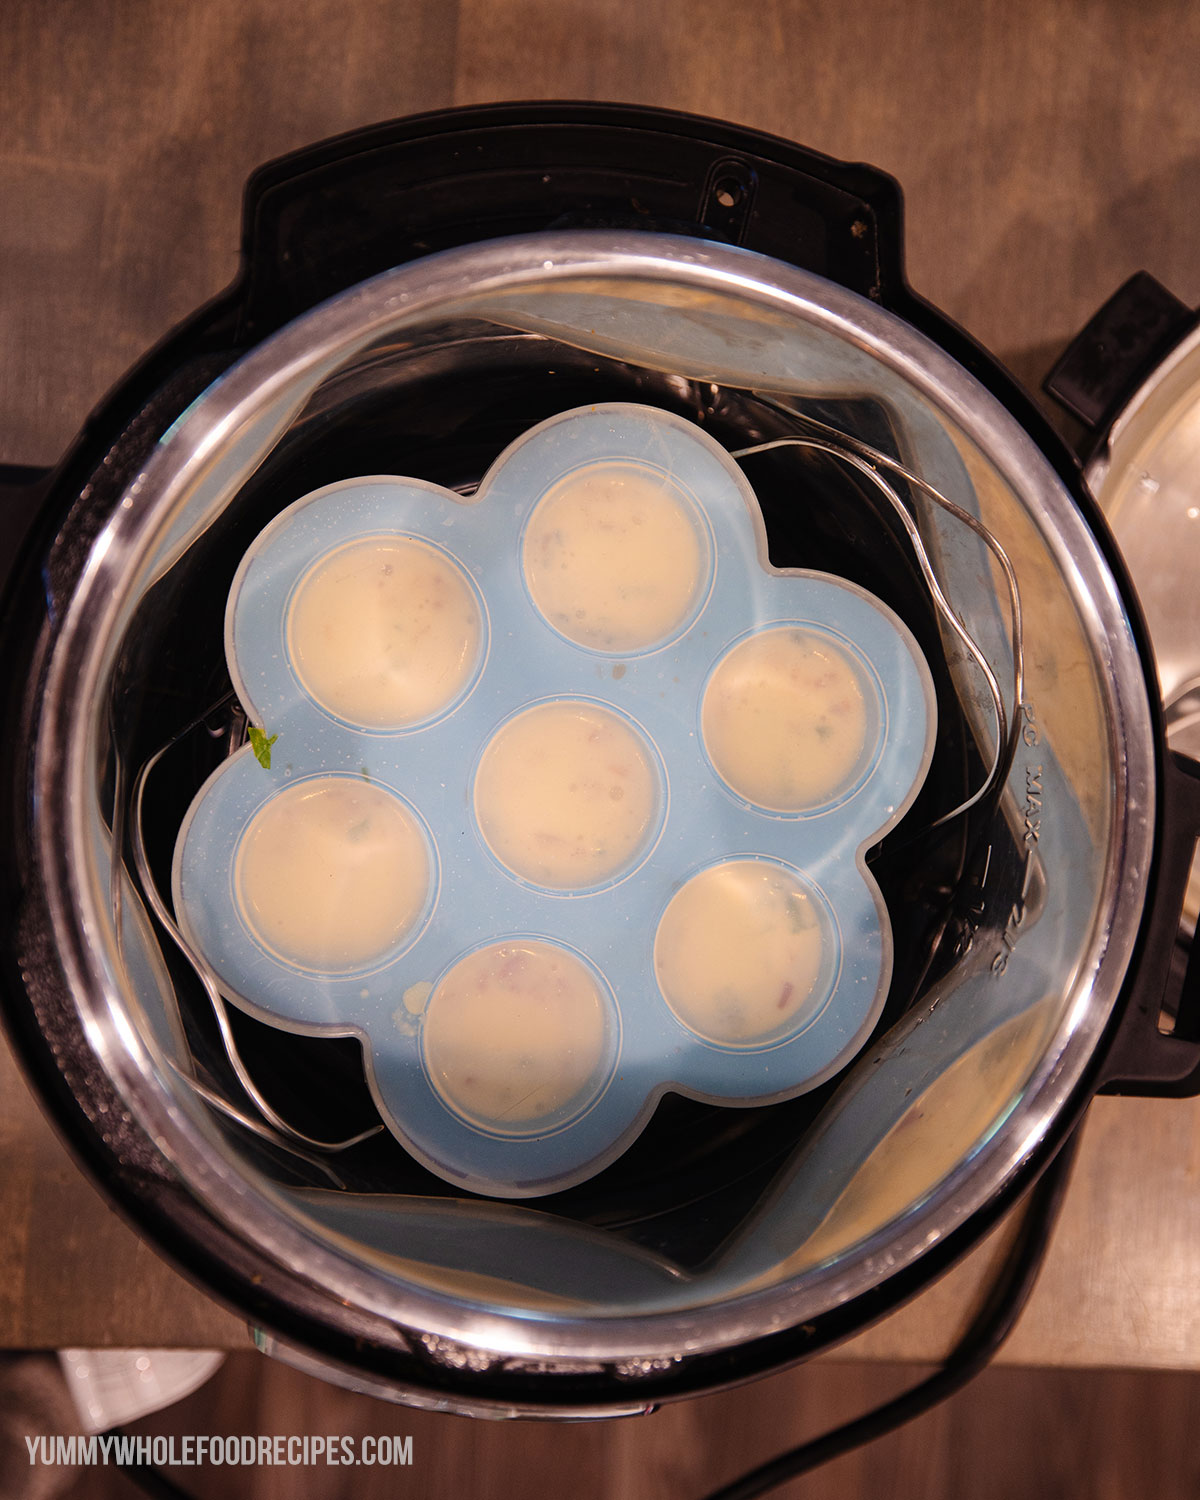 Old Home Kitchen Egg Bites Tray with Lid | Silicone Egg Bites Tray | Egg Bites Molds Silicone | Instant Pot Accessories | Egg Bite Maker for Pressure Cooker